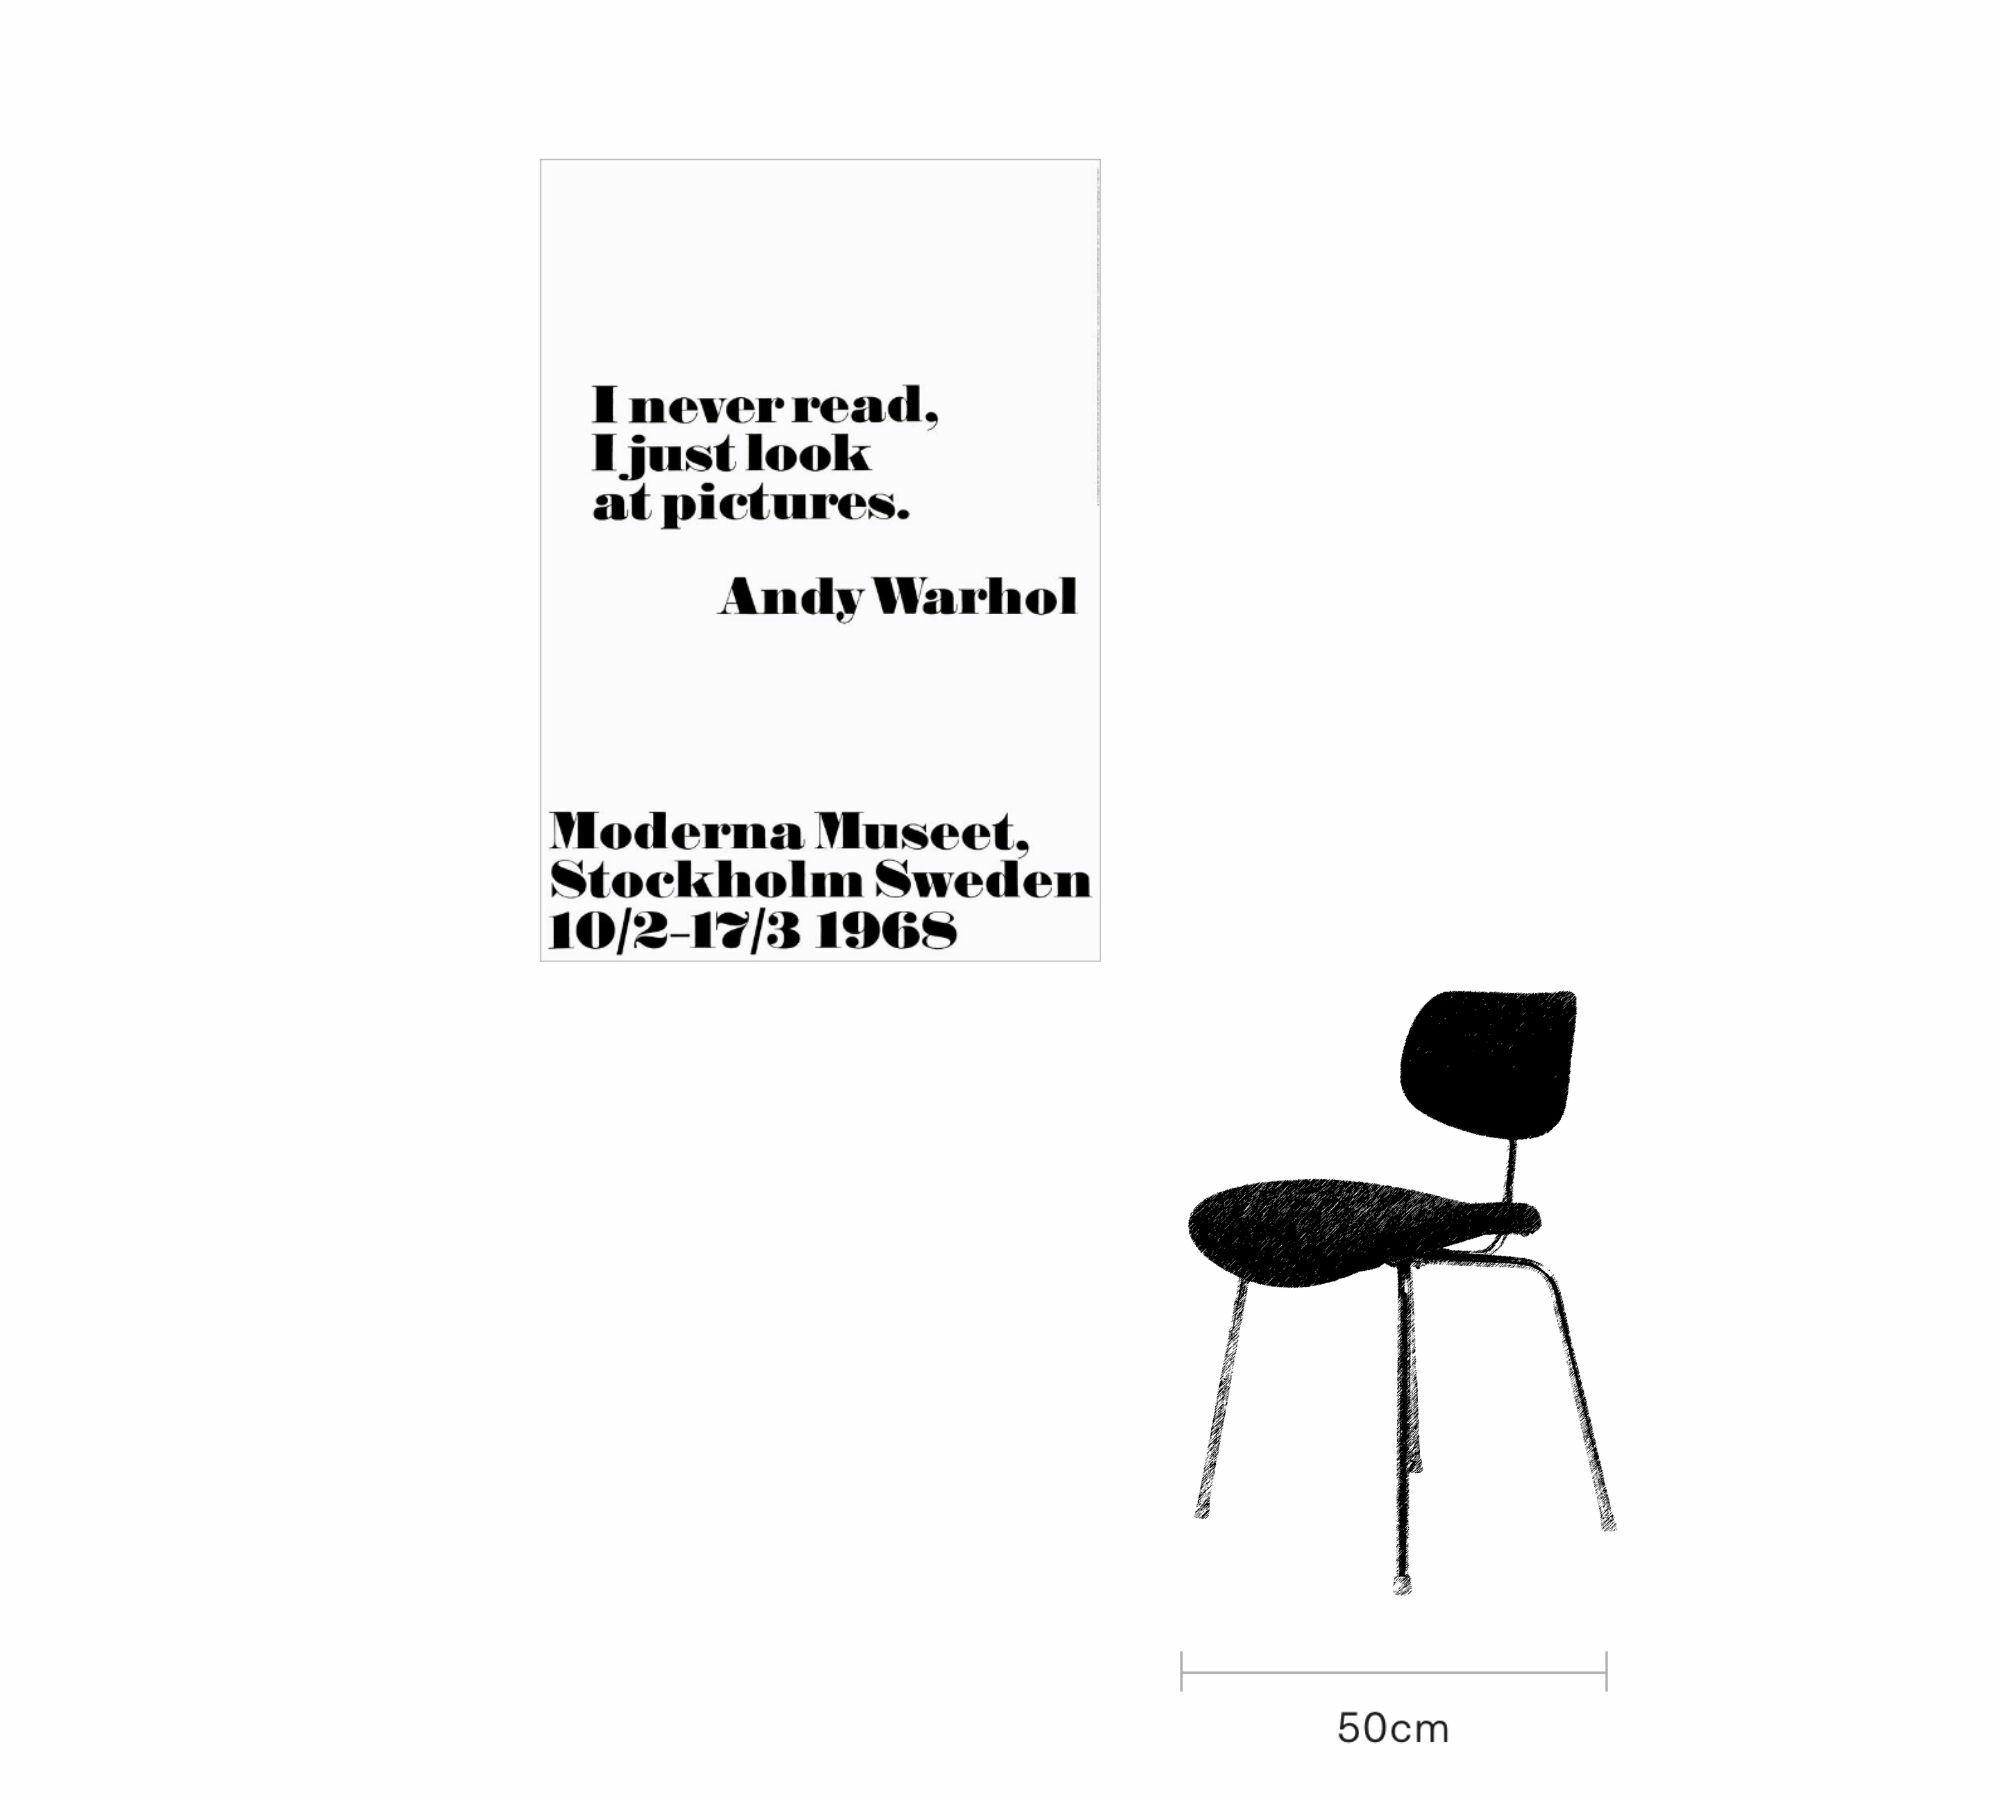 I never read - Andy Warhol 70 x 100 cm 4